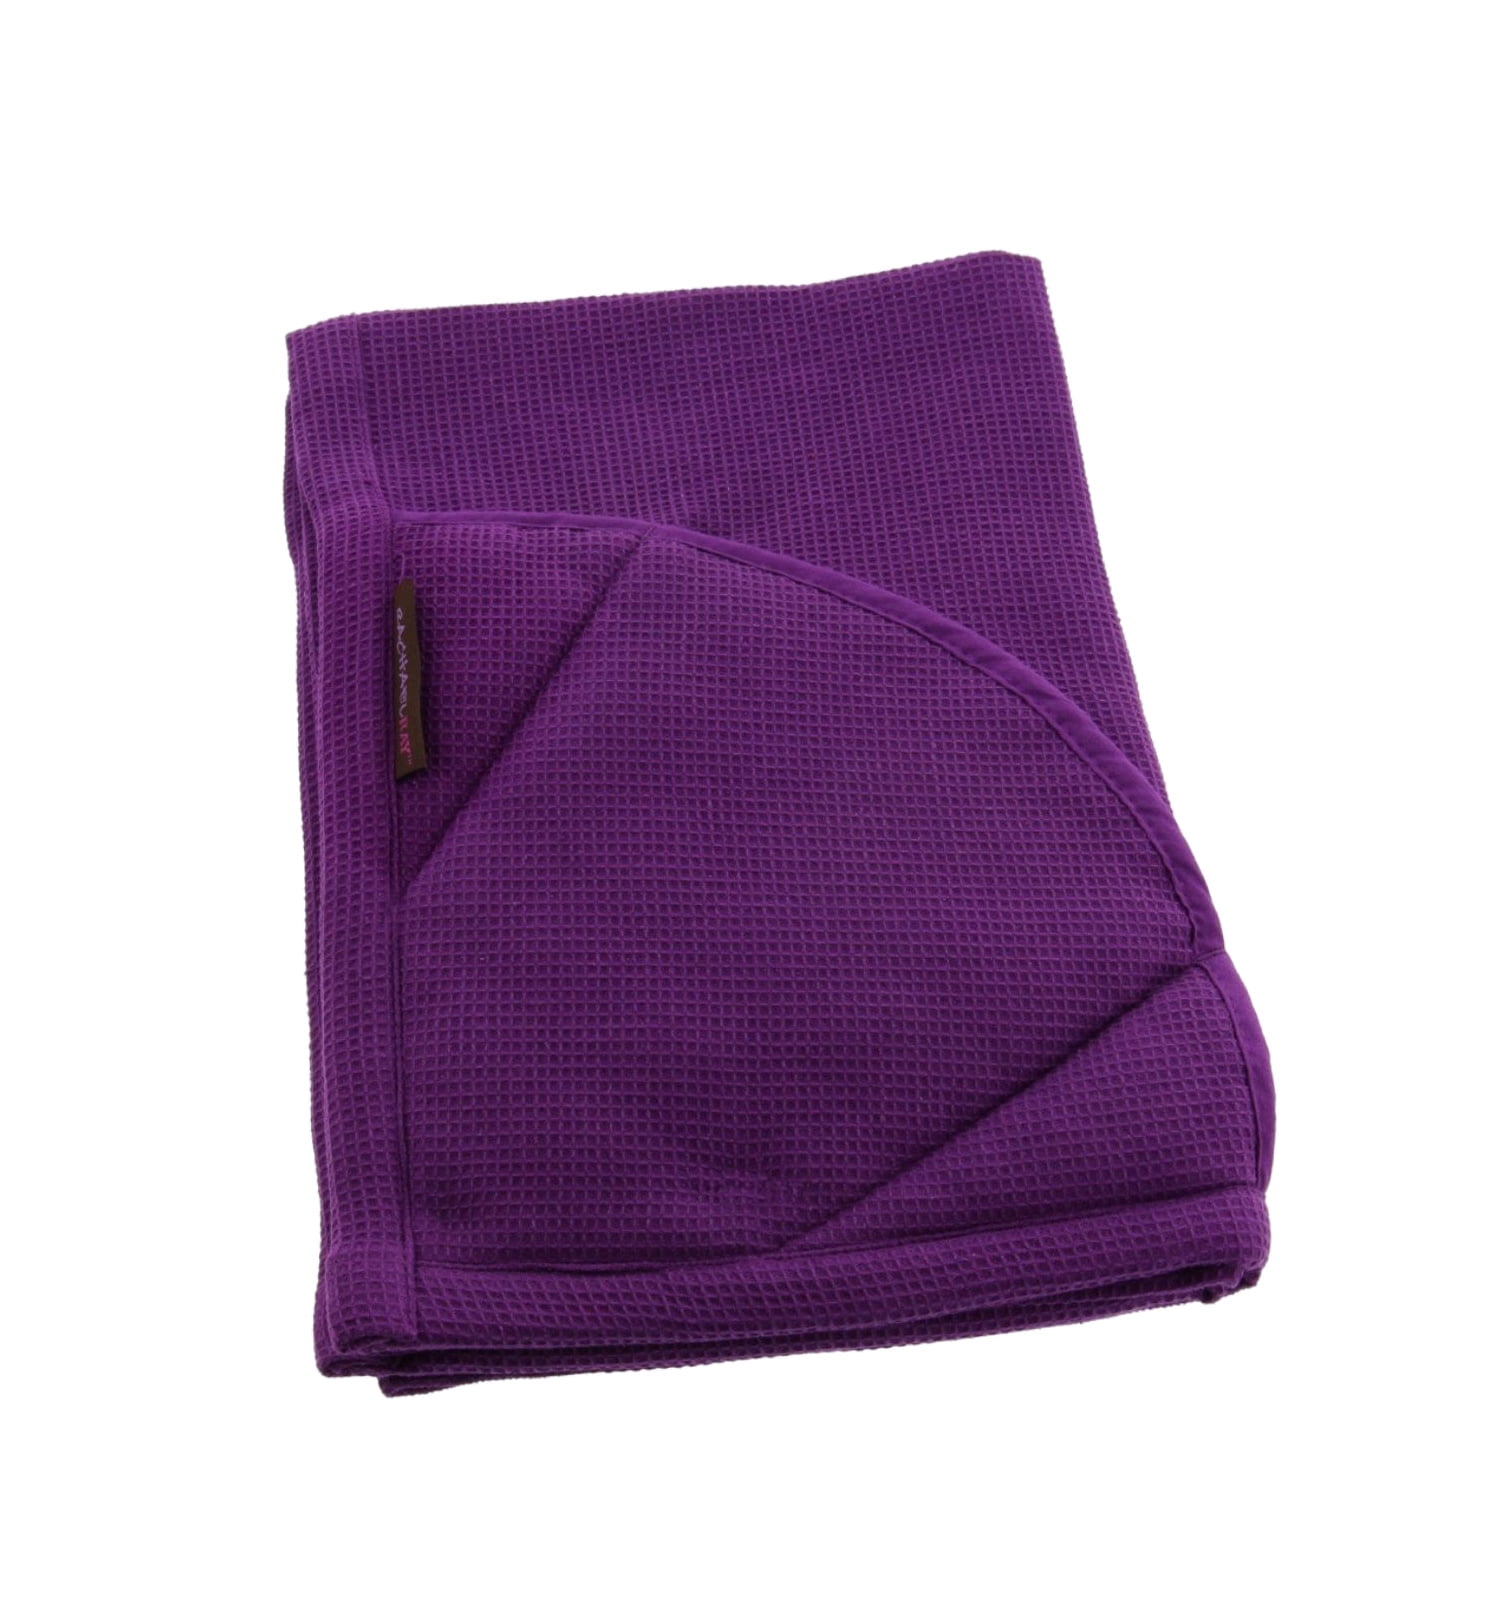 Raita Towel - Large - Purple/Clay/Brown –